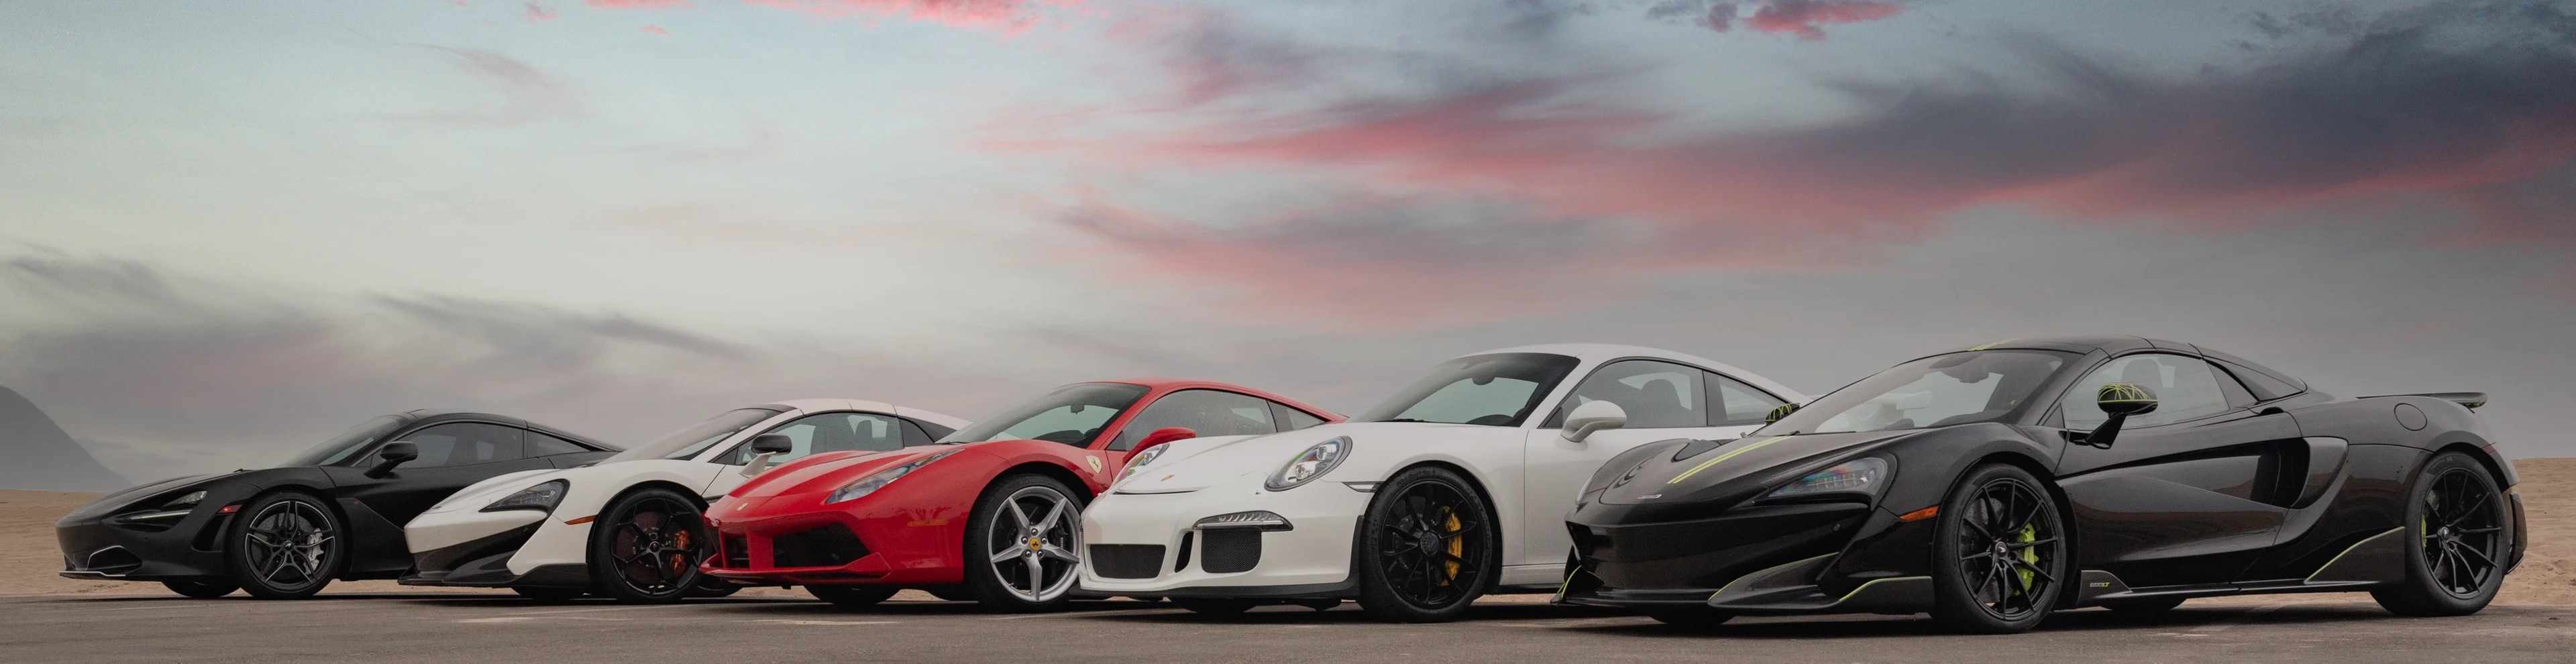 Mclarens, a Ferrari, and Porsche from luxury car company Motorenn’s inventory parked along the beach